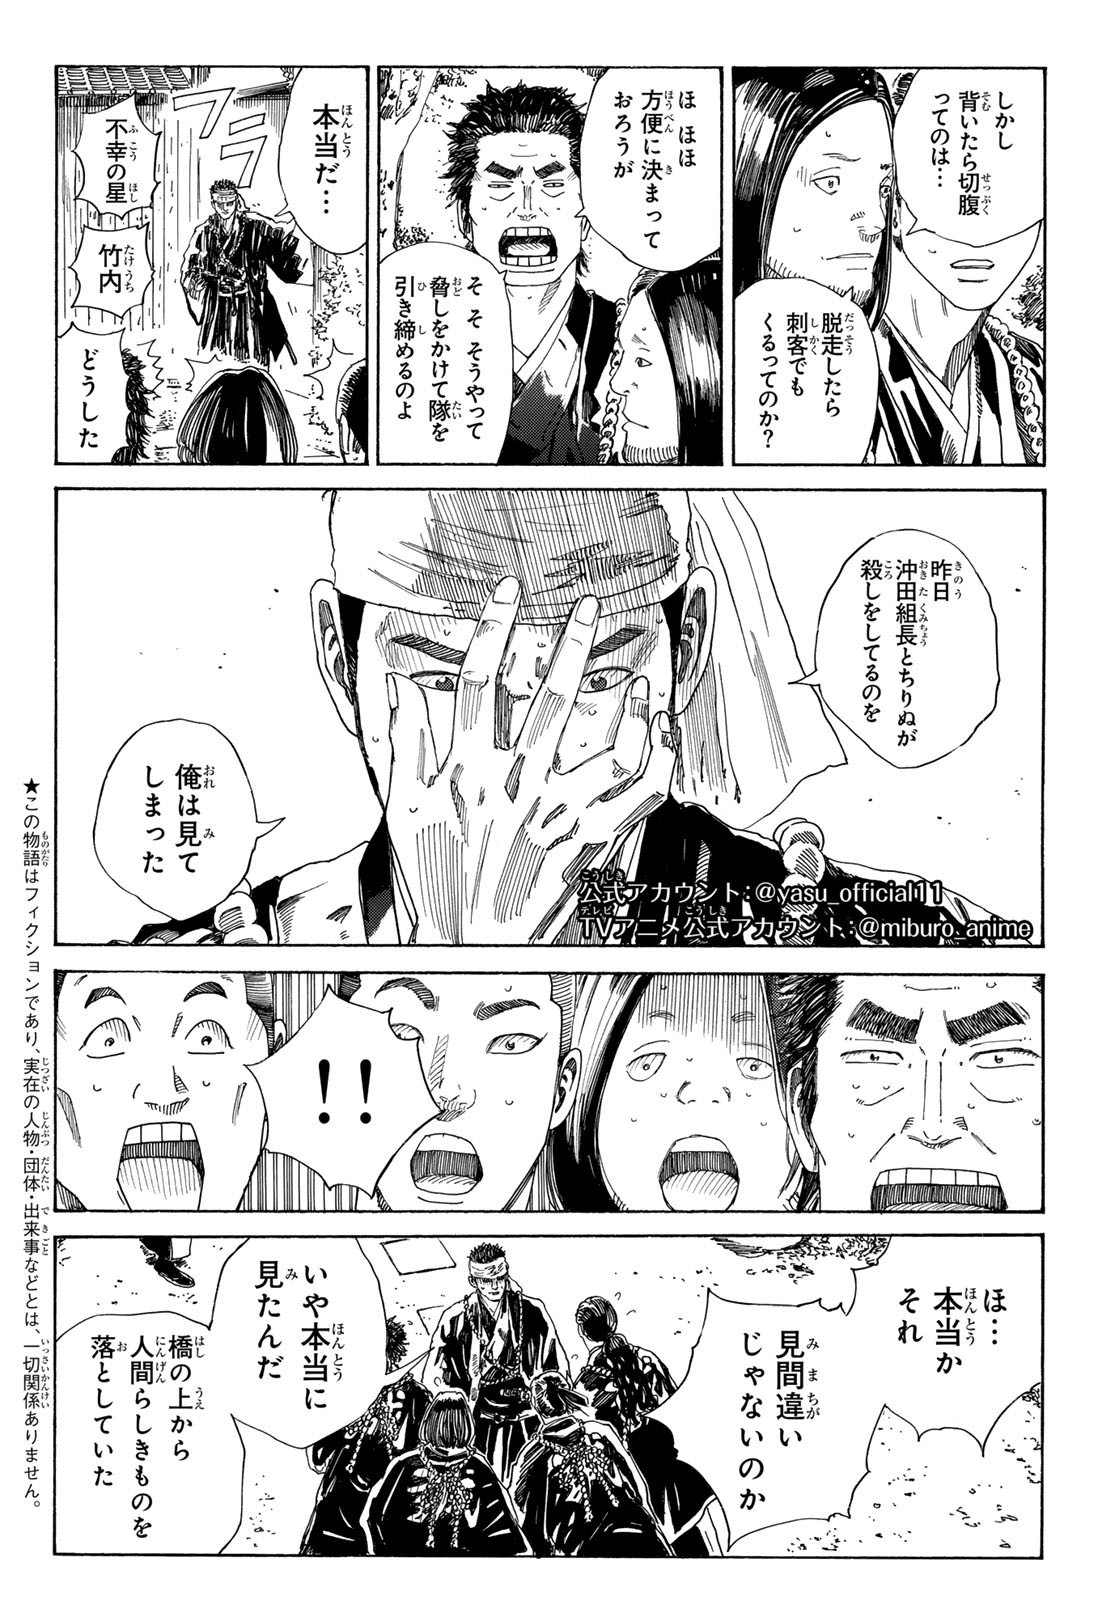 Ao no Miburo - Chapter 124 - Page 2